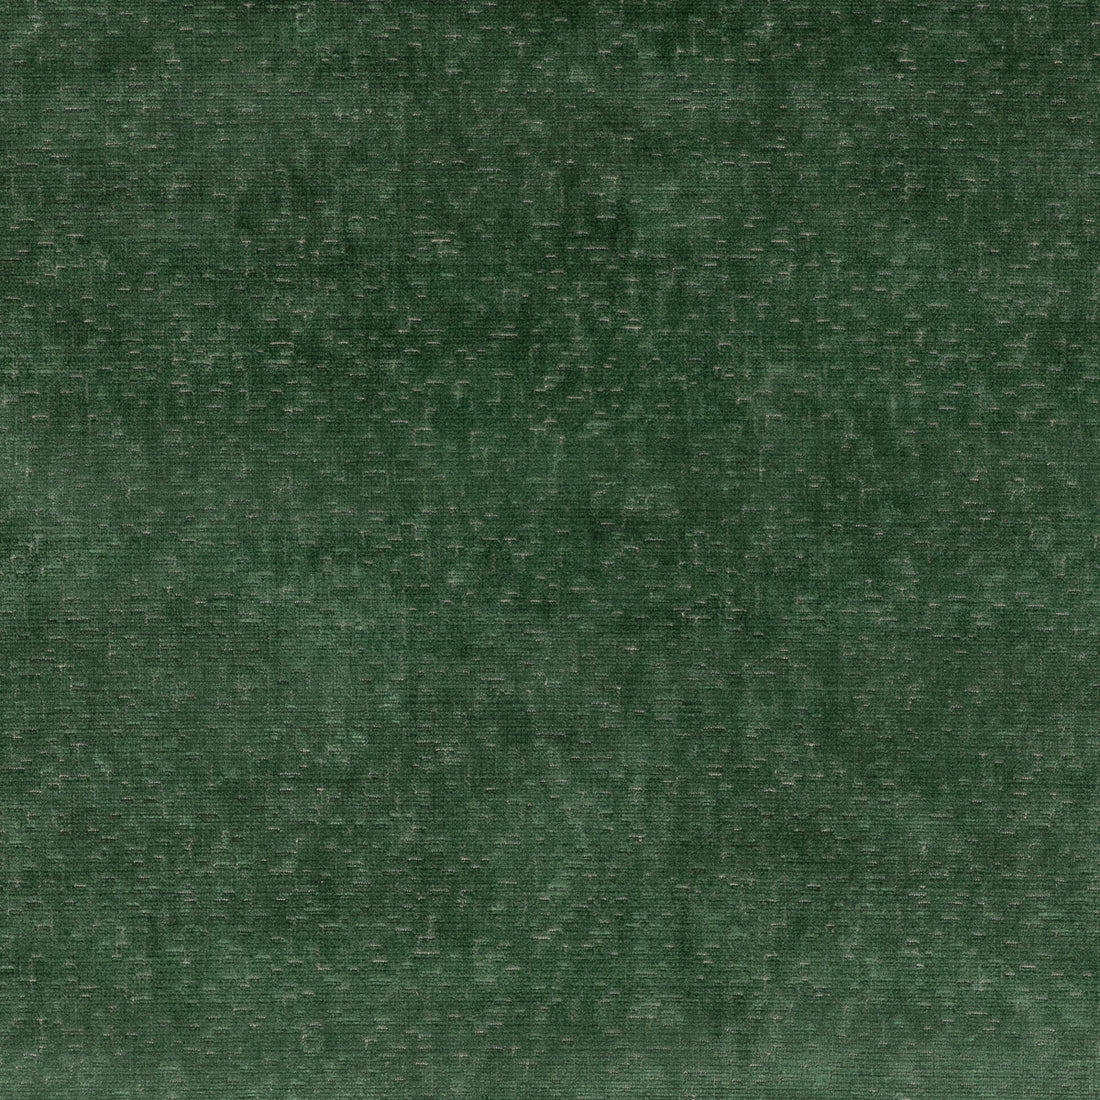 Alma Velvet fabric in emerald color - pattern BF10827.785.0 - by G P &amp; J Baker in the Coromandel Velvets collection